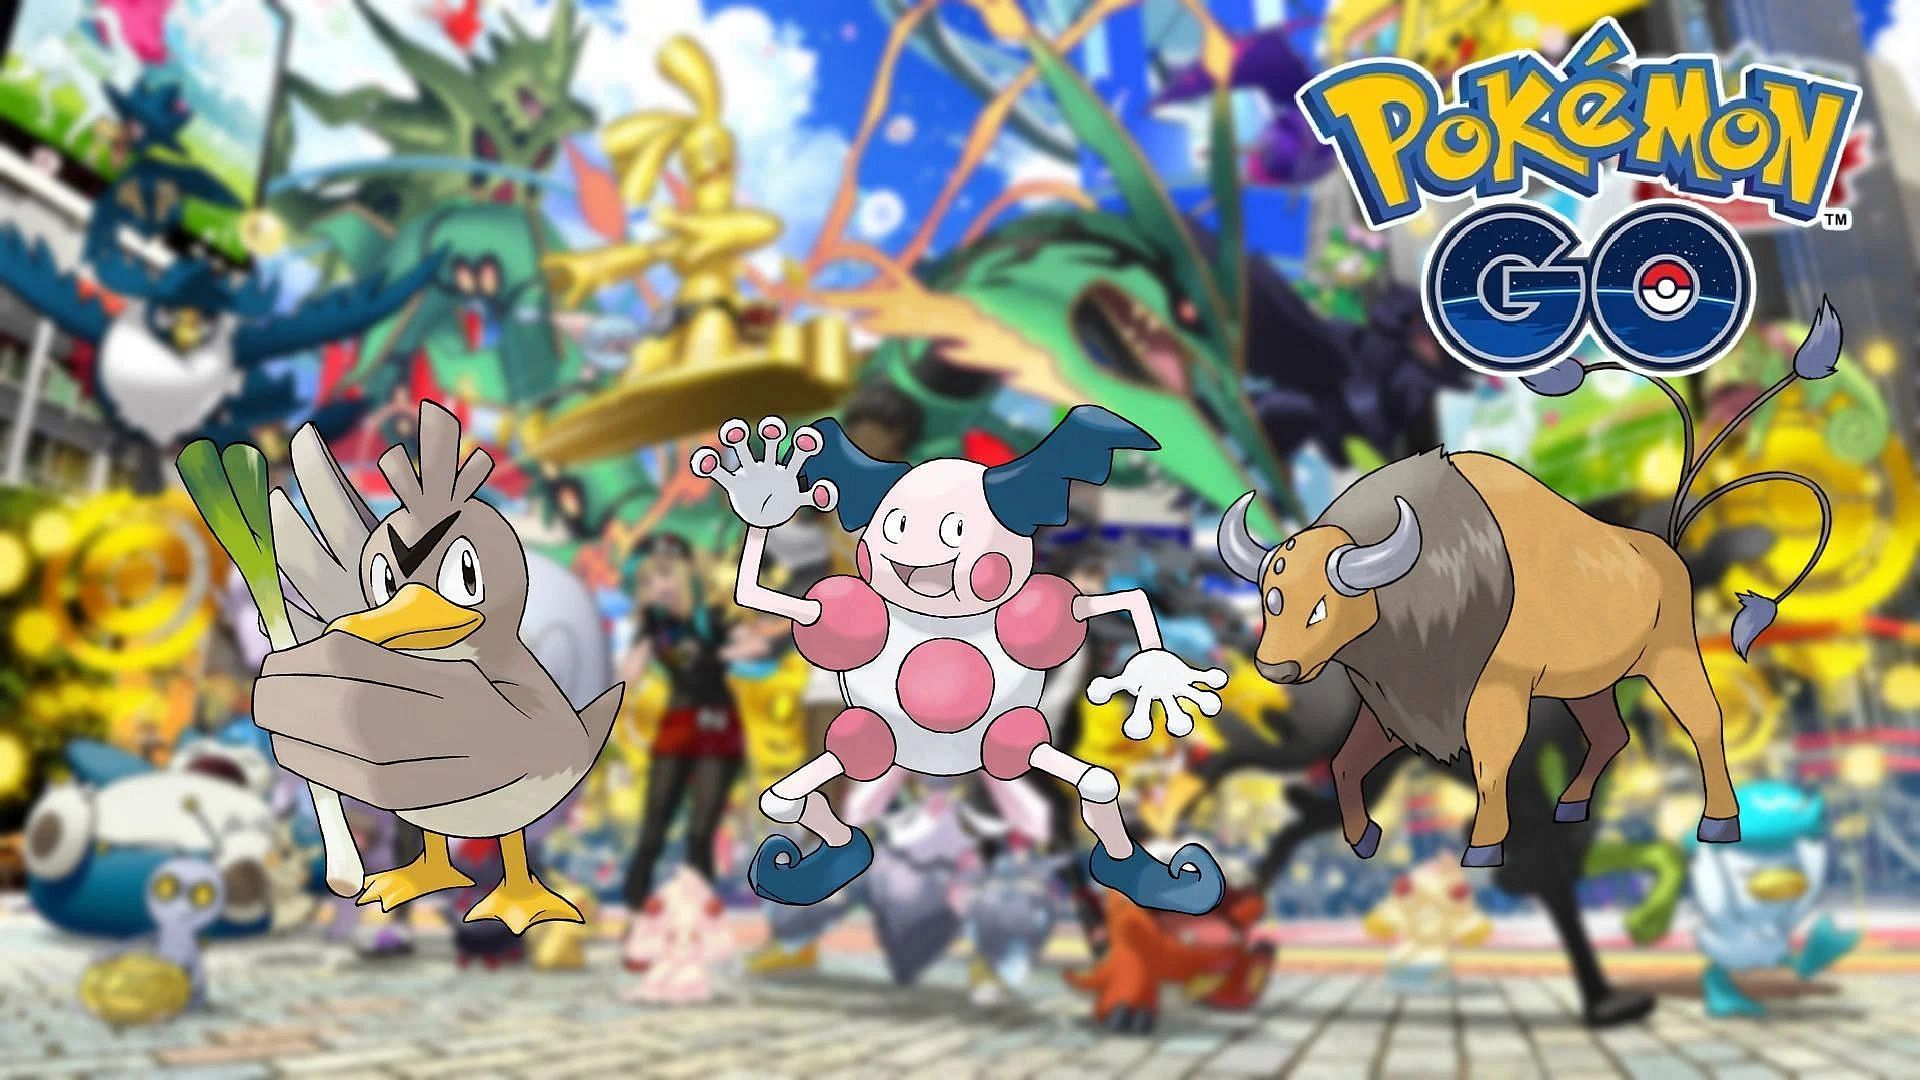 Pokémon Go - como apanhar os Pokémon Exclusivos Tauros, Kangaskhan, Mr.  Mime, Farfetch'd, Heracross e Corsola